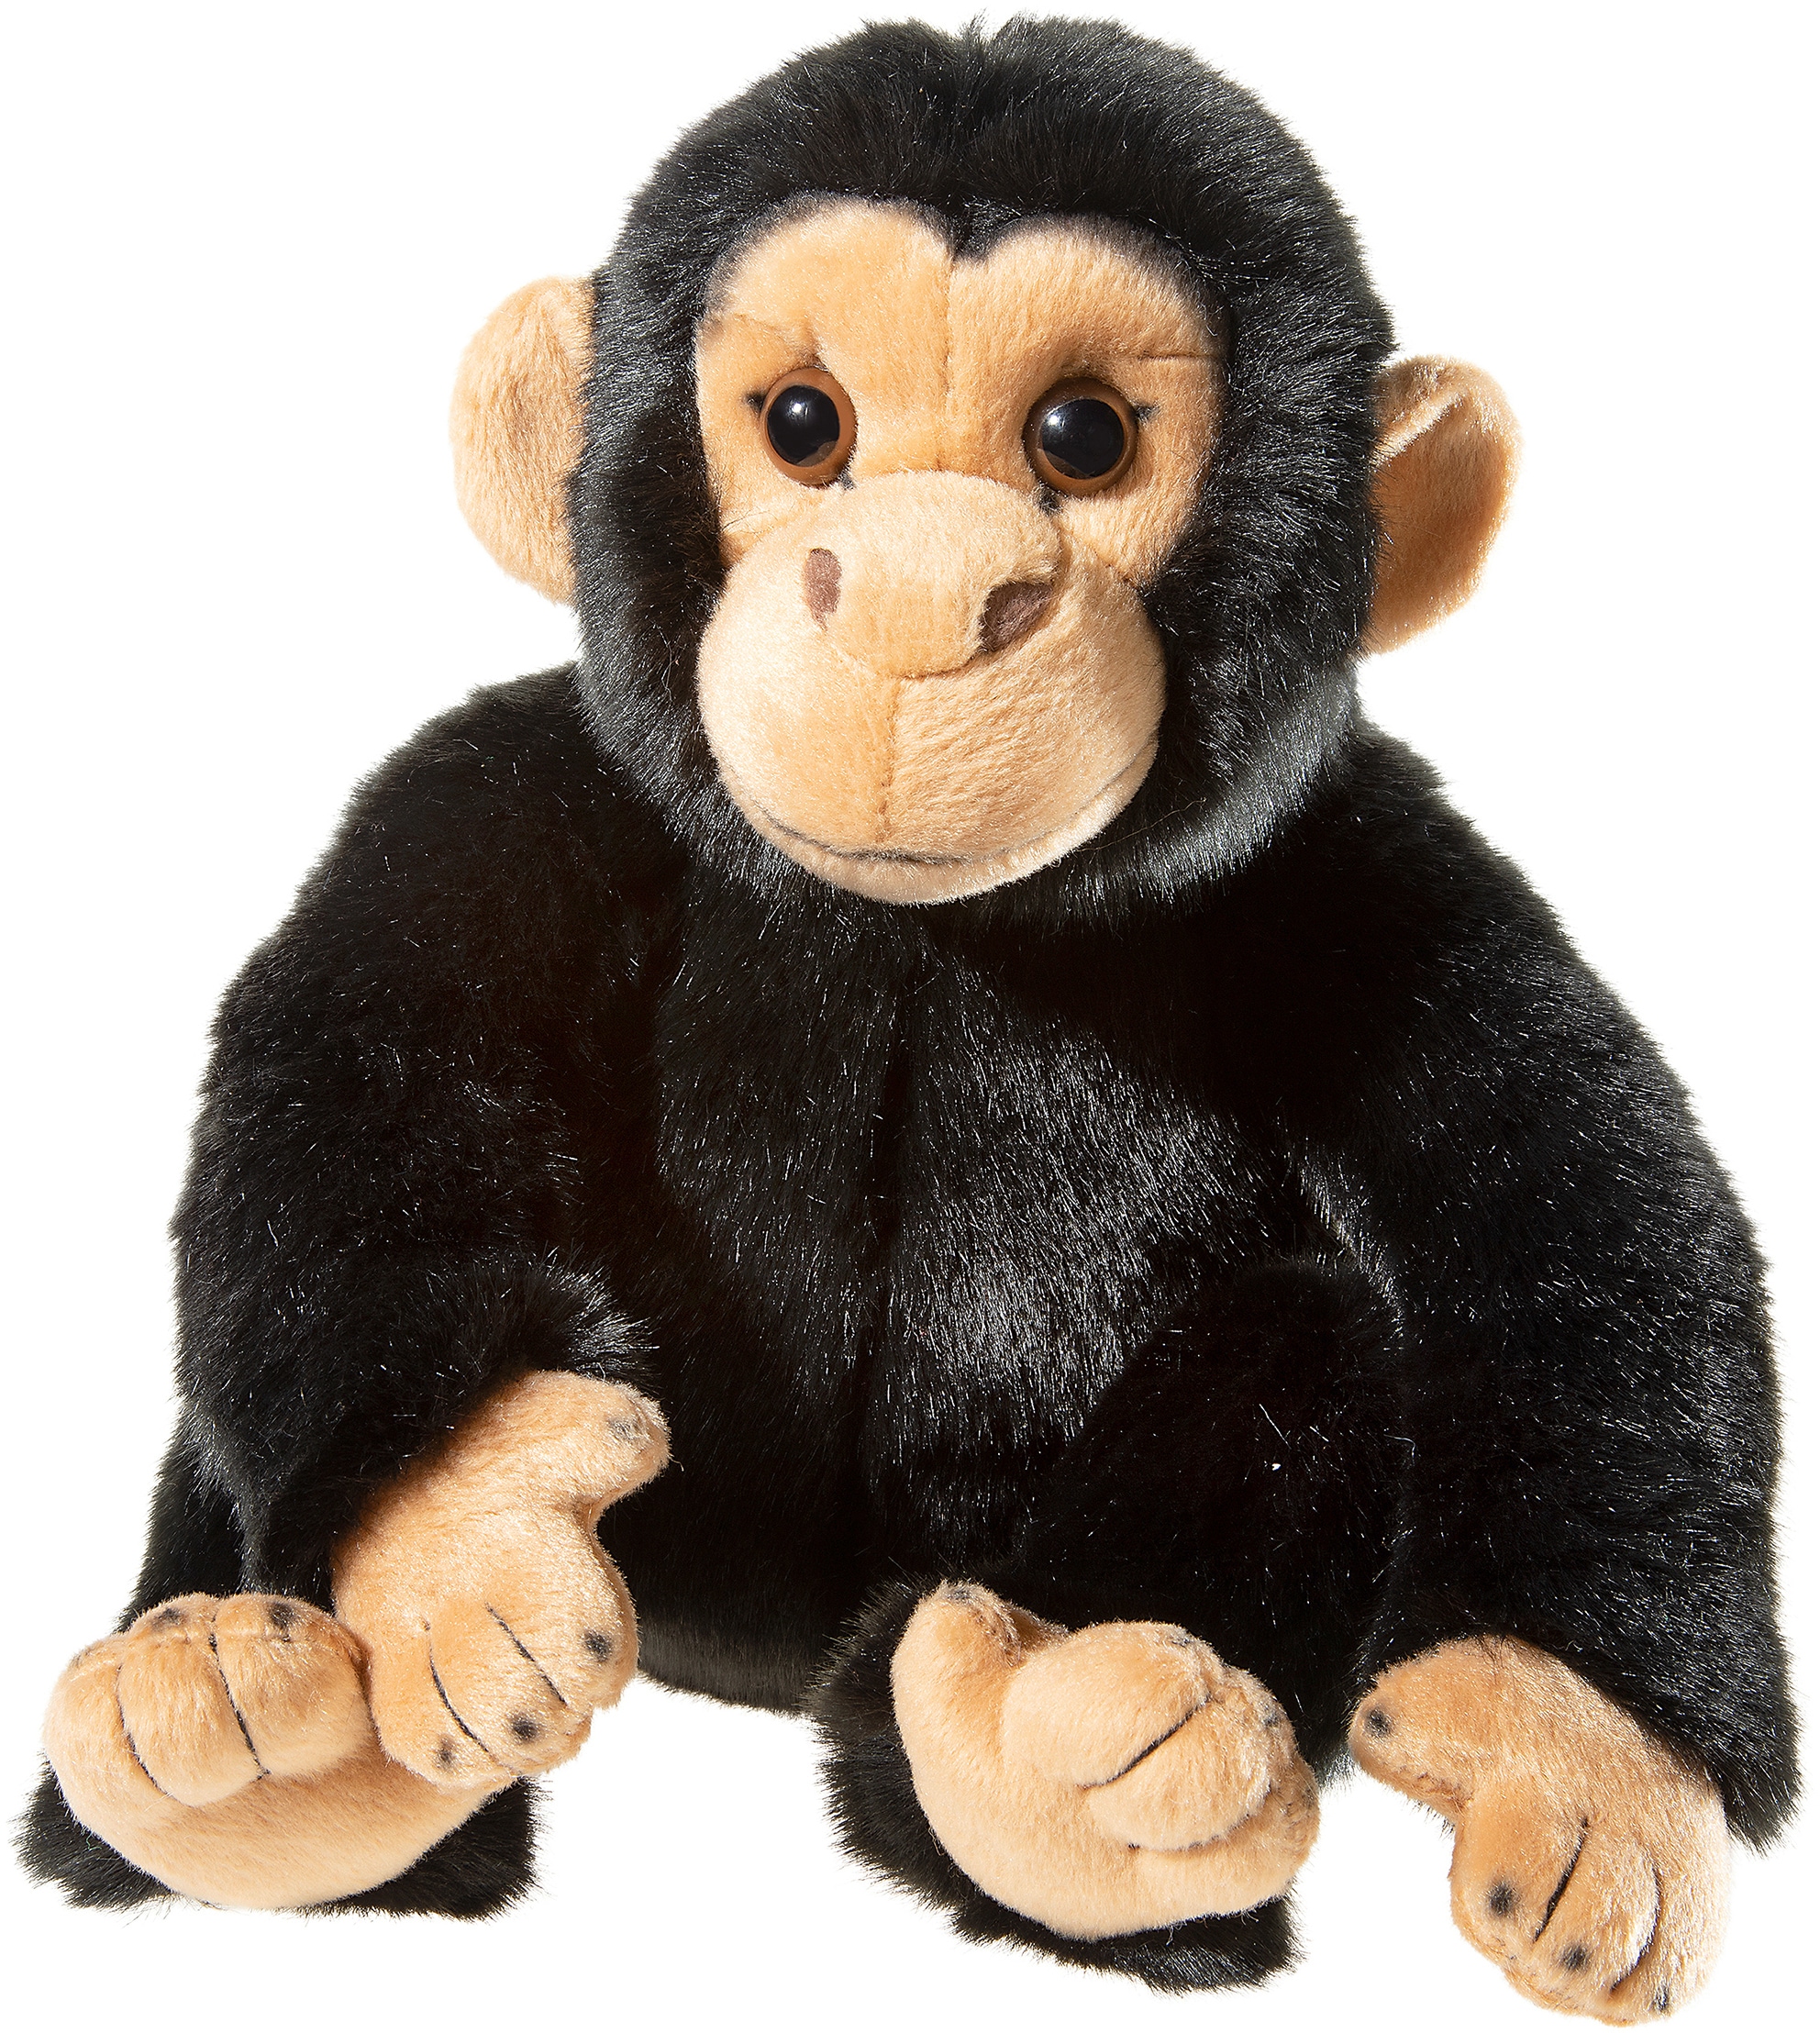 Kuscheltier »Misanimo, Schimpanse, 24 cm«